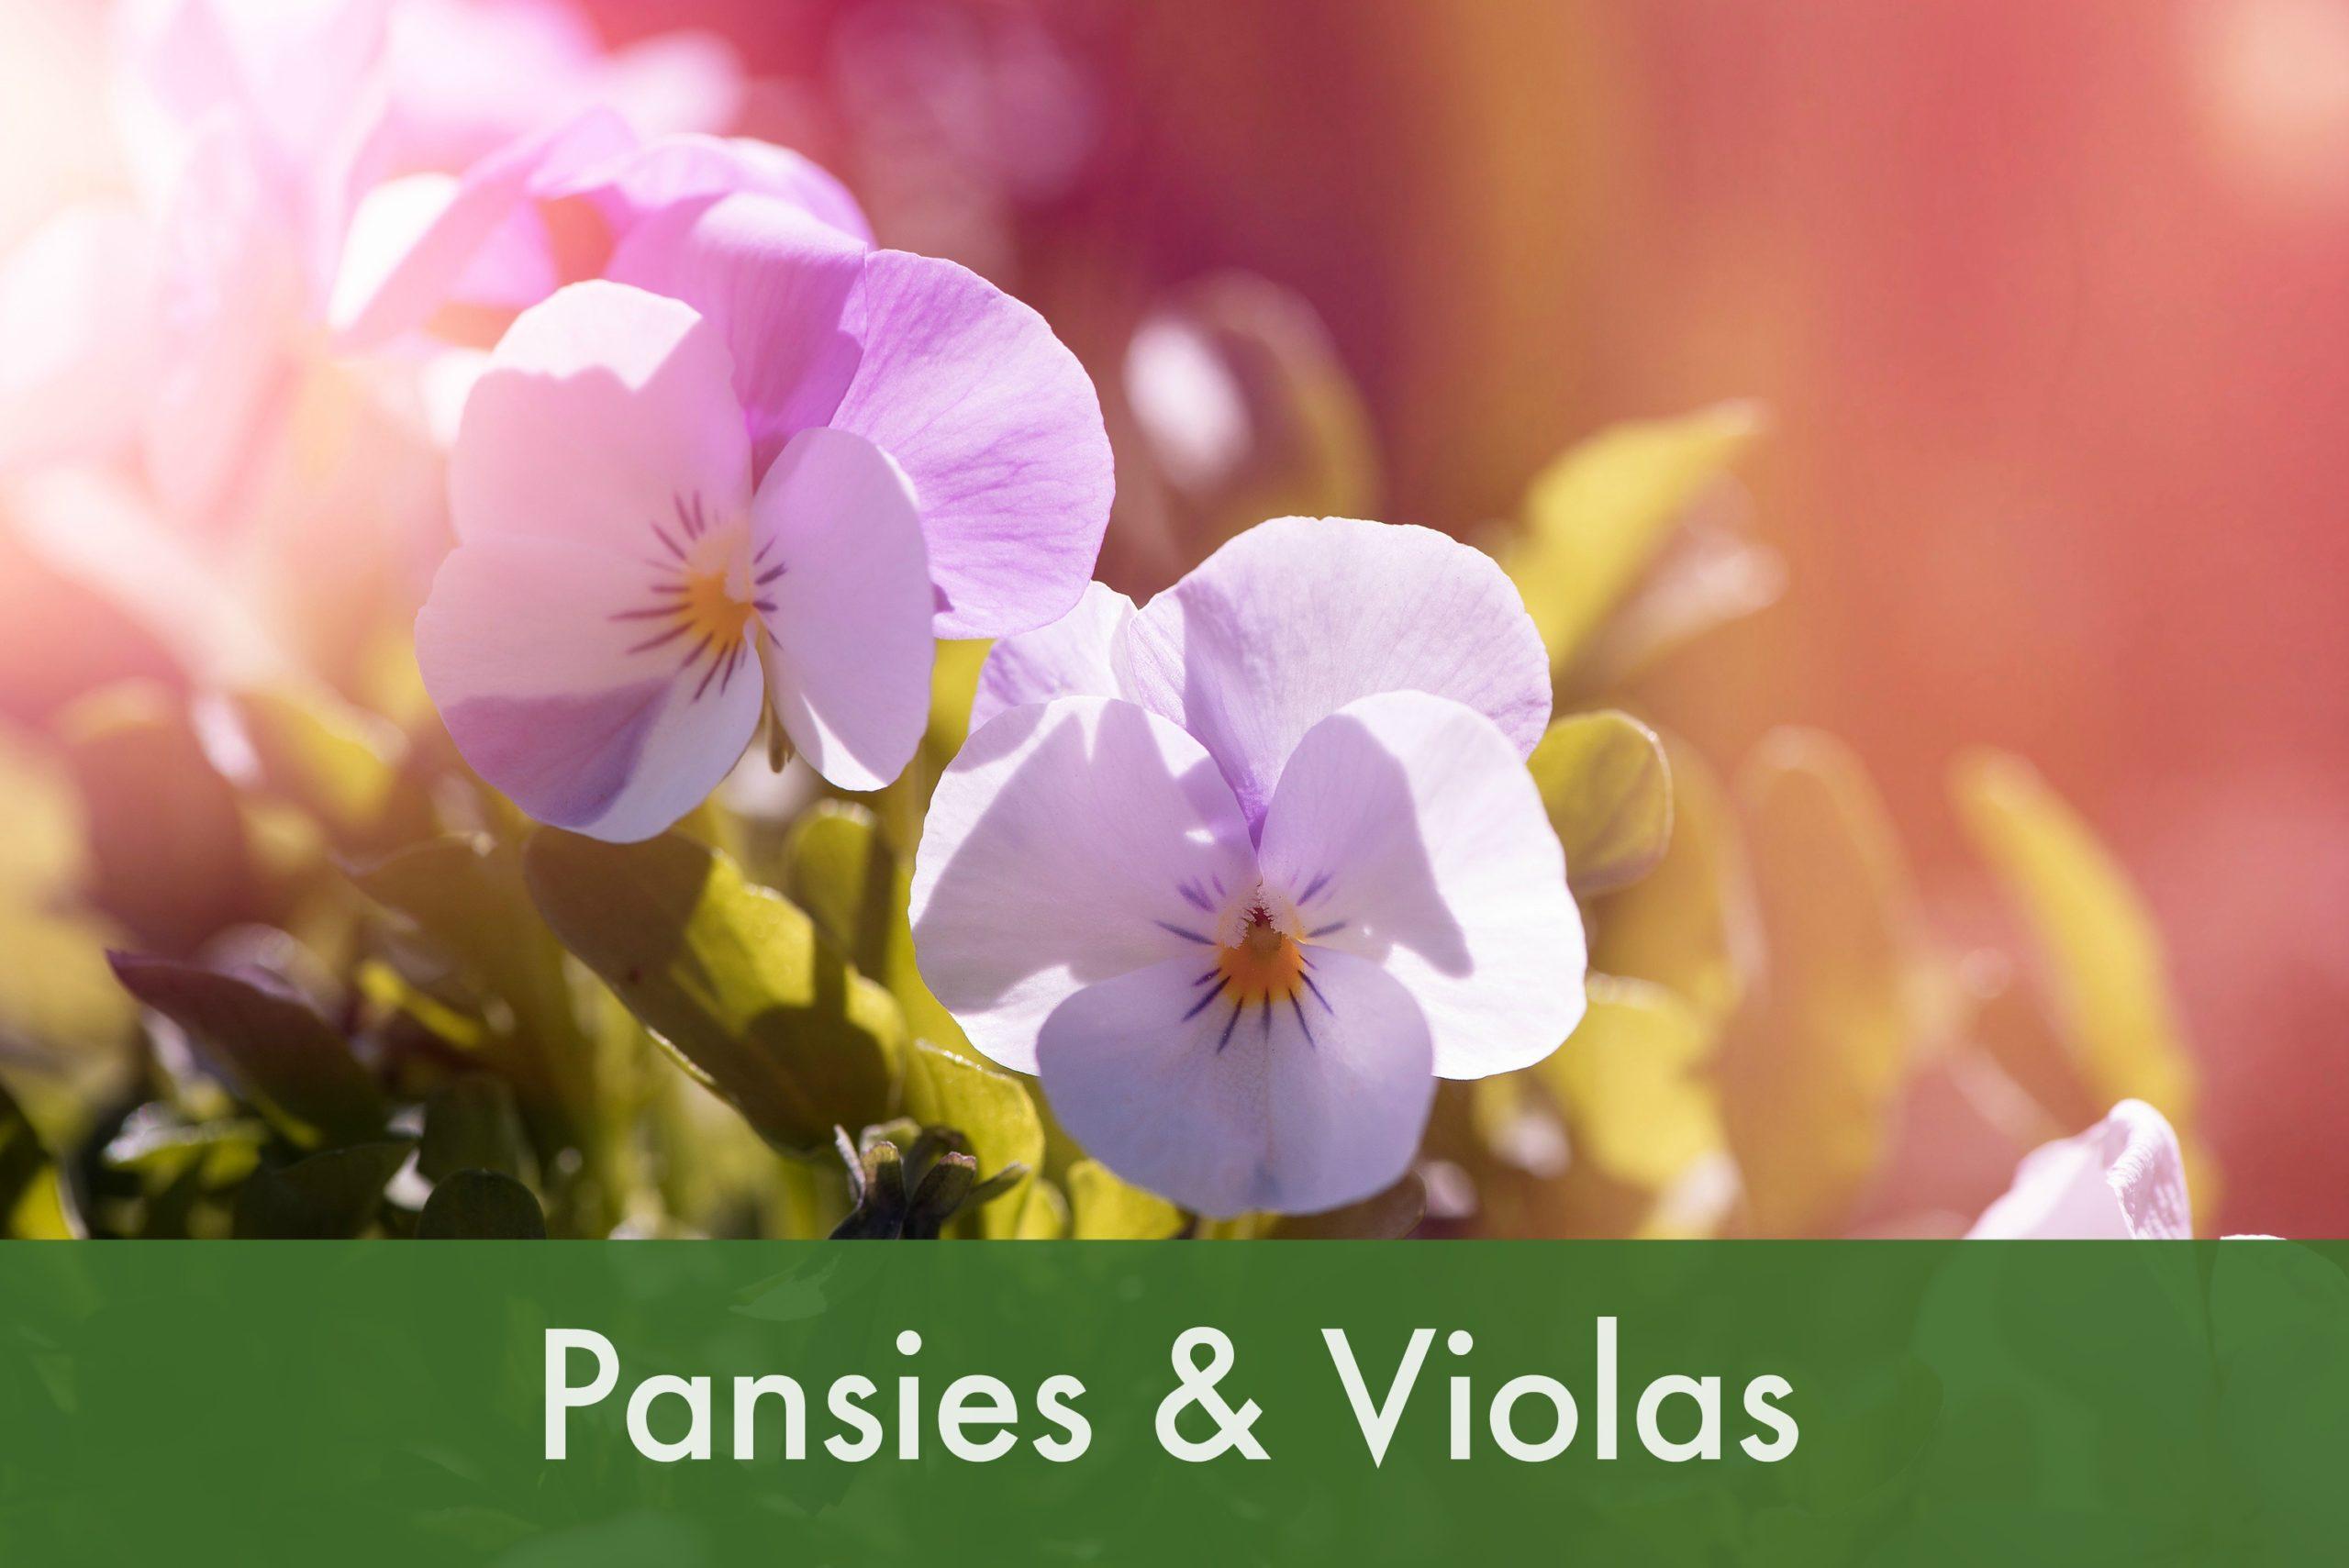 Pansies & Violas – Our Favorite Winter Annuals!